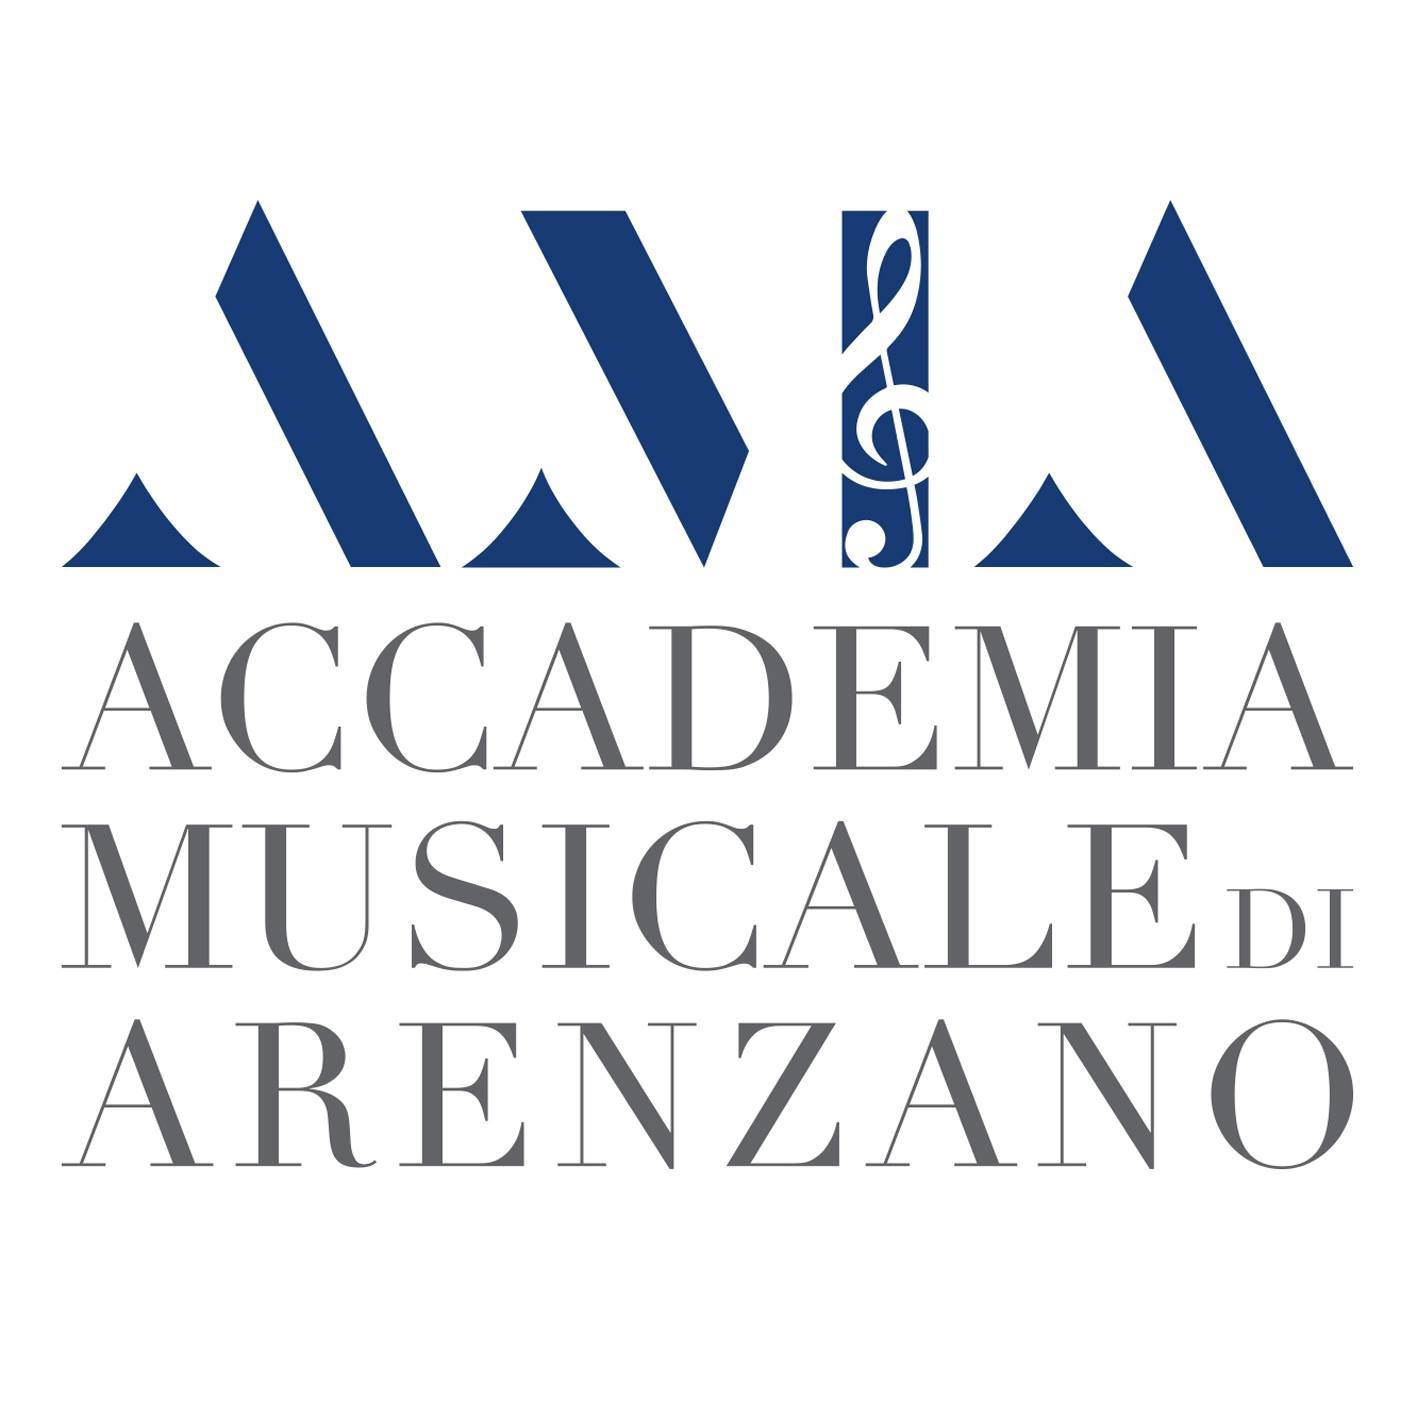 AMA - Accademia Musicale Arenzano